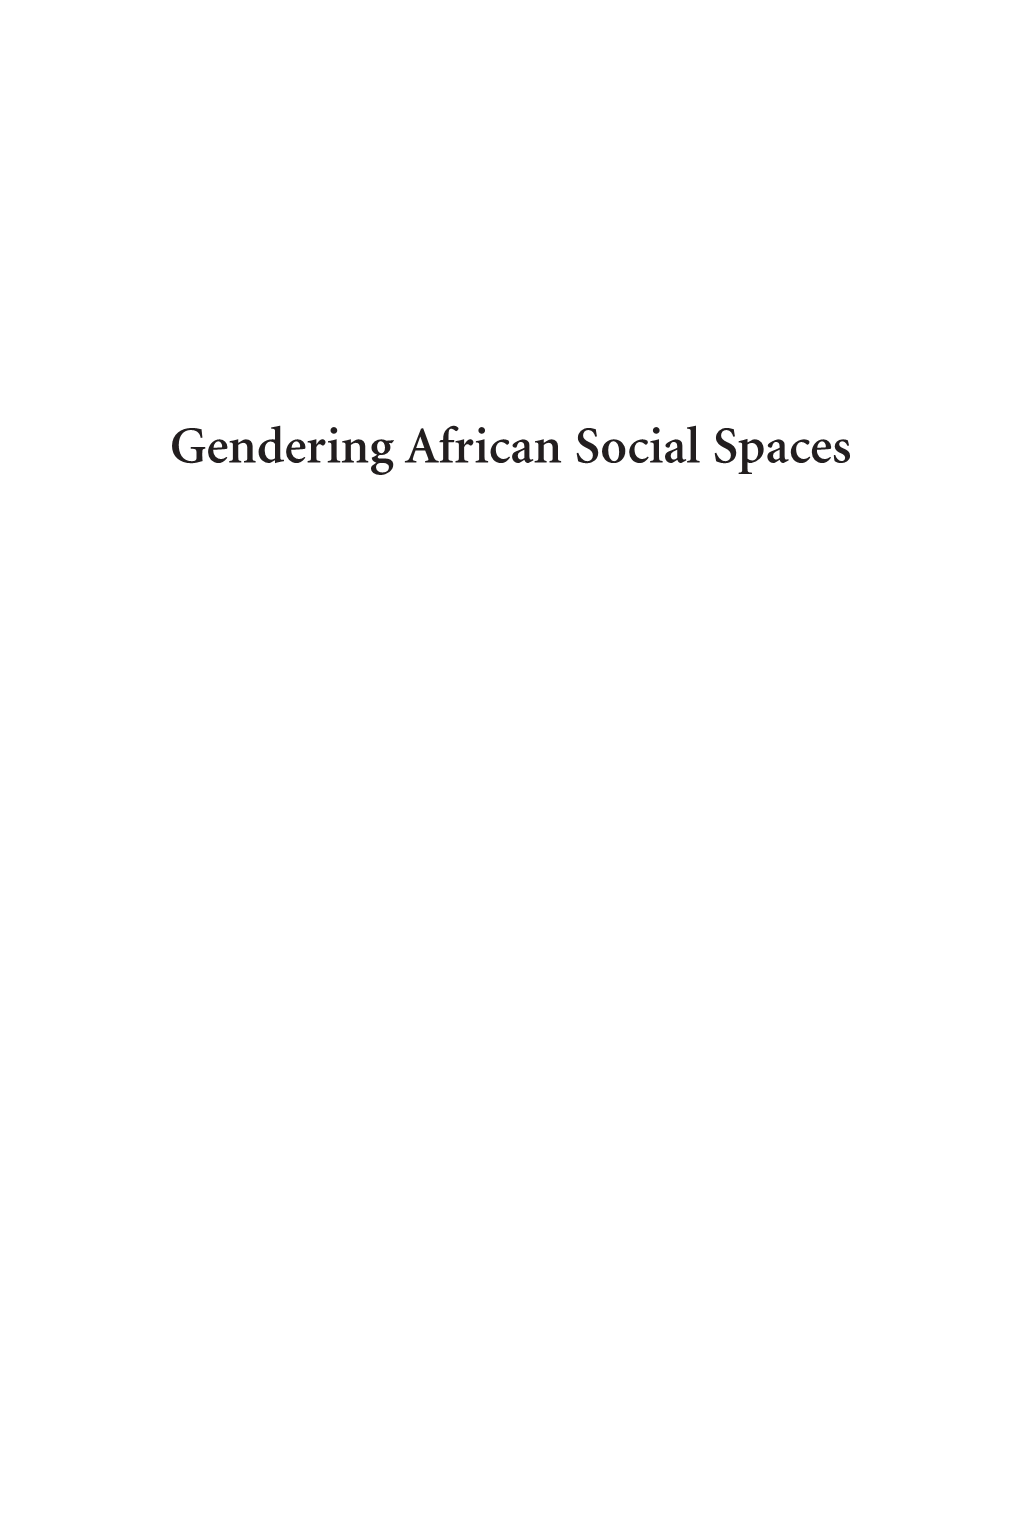 Gendering African Social Spaces Falola Nasongo 00 F2 11/6/15 11:19 AM Page Ii